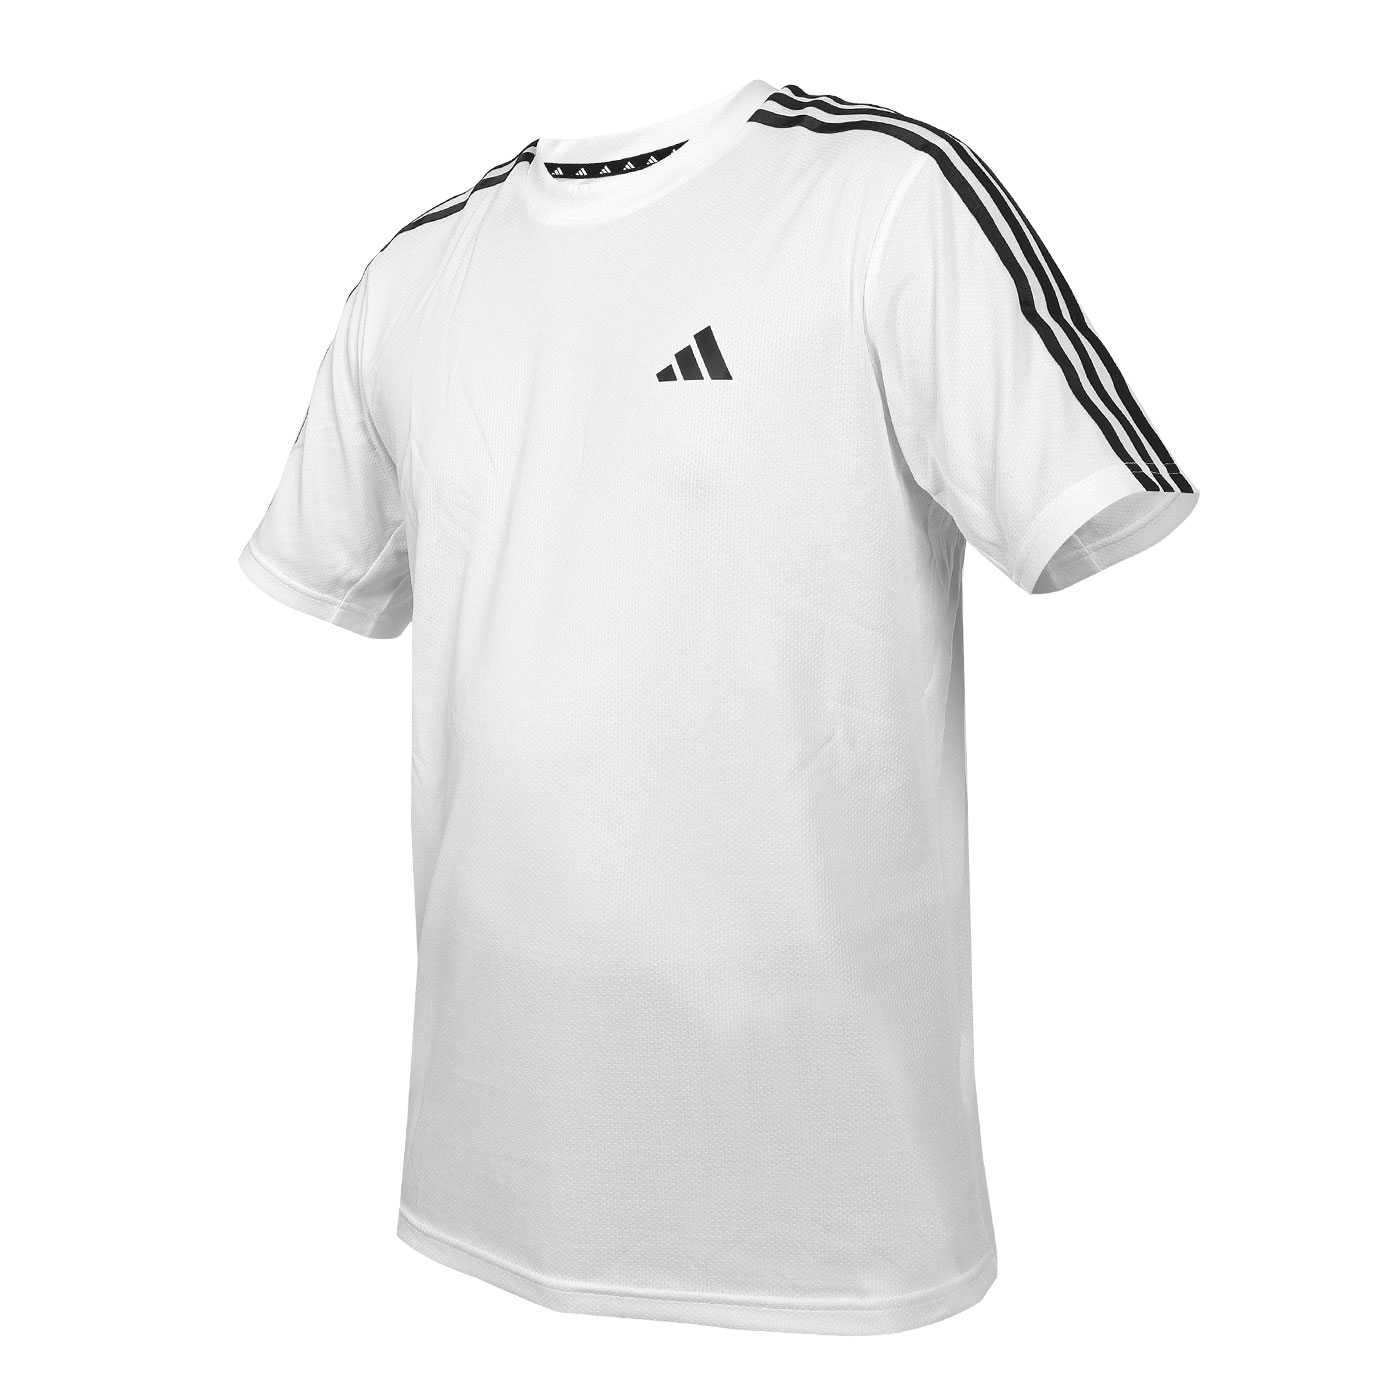 ADIDAS 男款短袖T恤  IB8151 - 白黑